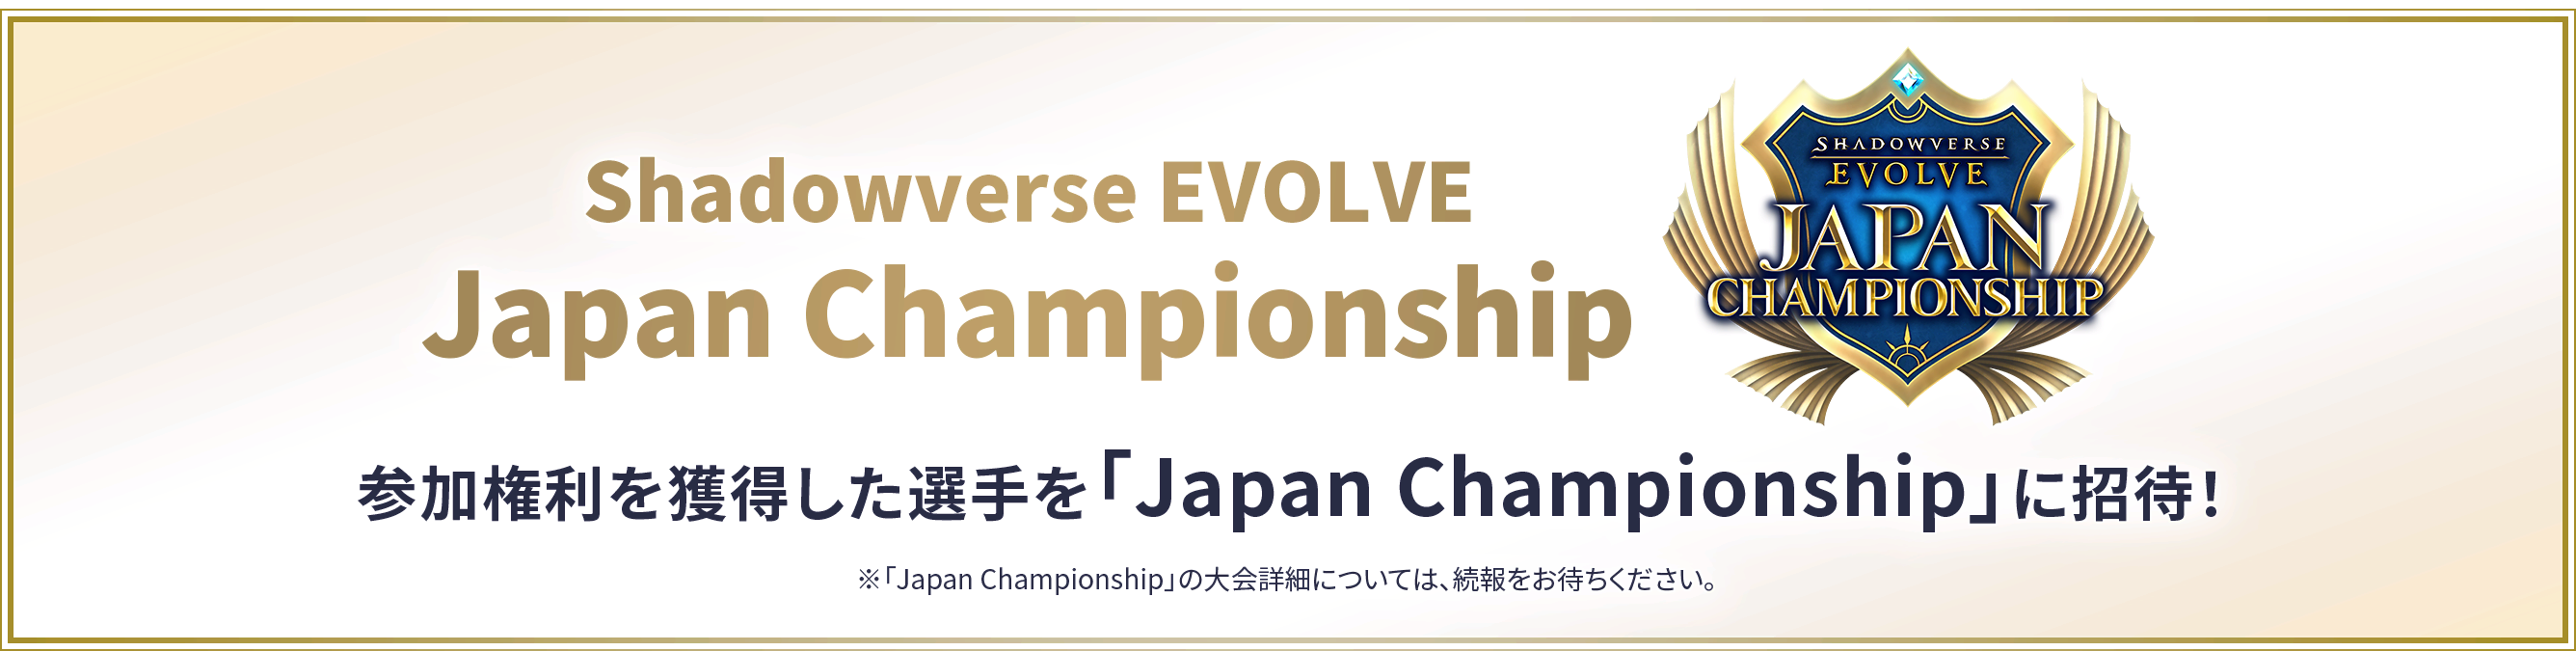 Shadowverse EVOLVE Japan Championship 参加権利を獲得した選手を「Japn Championship」に招待！